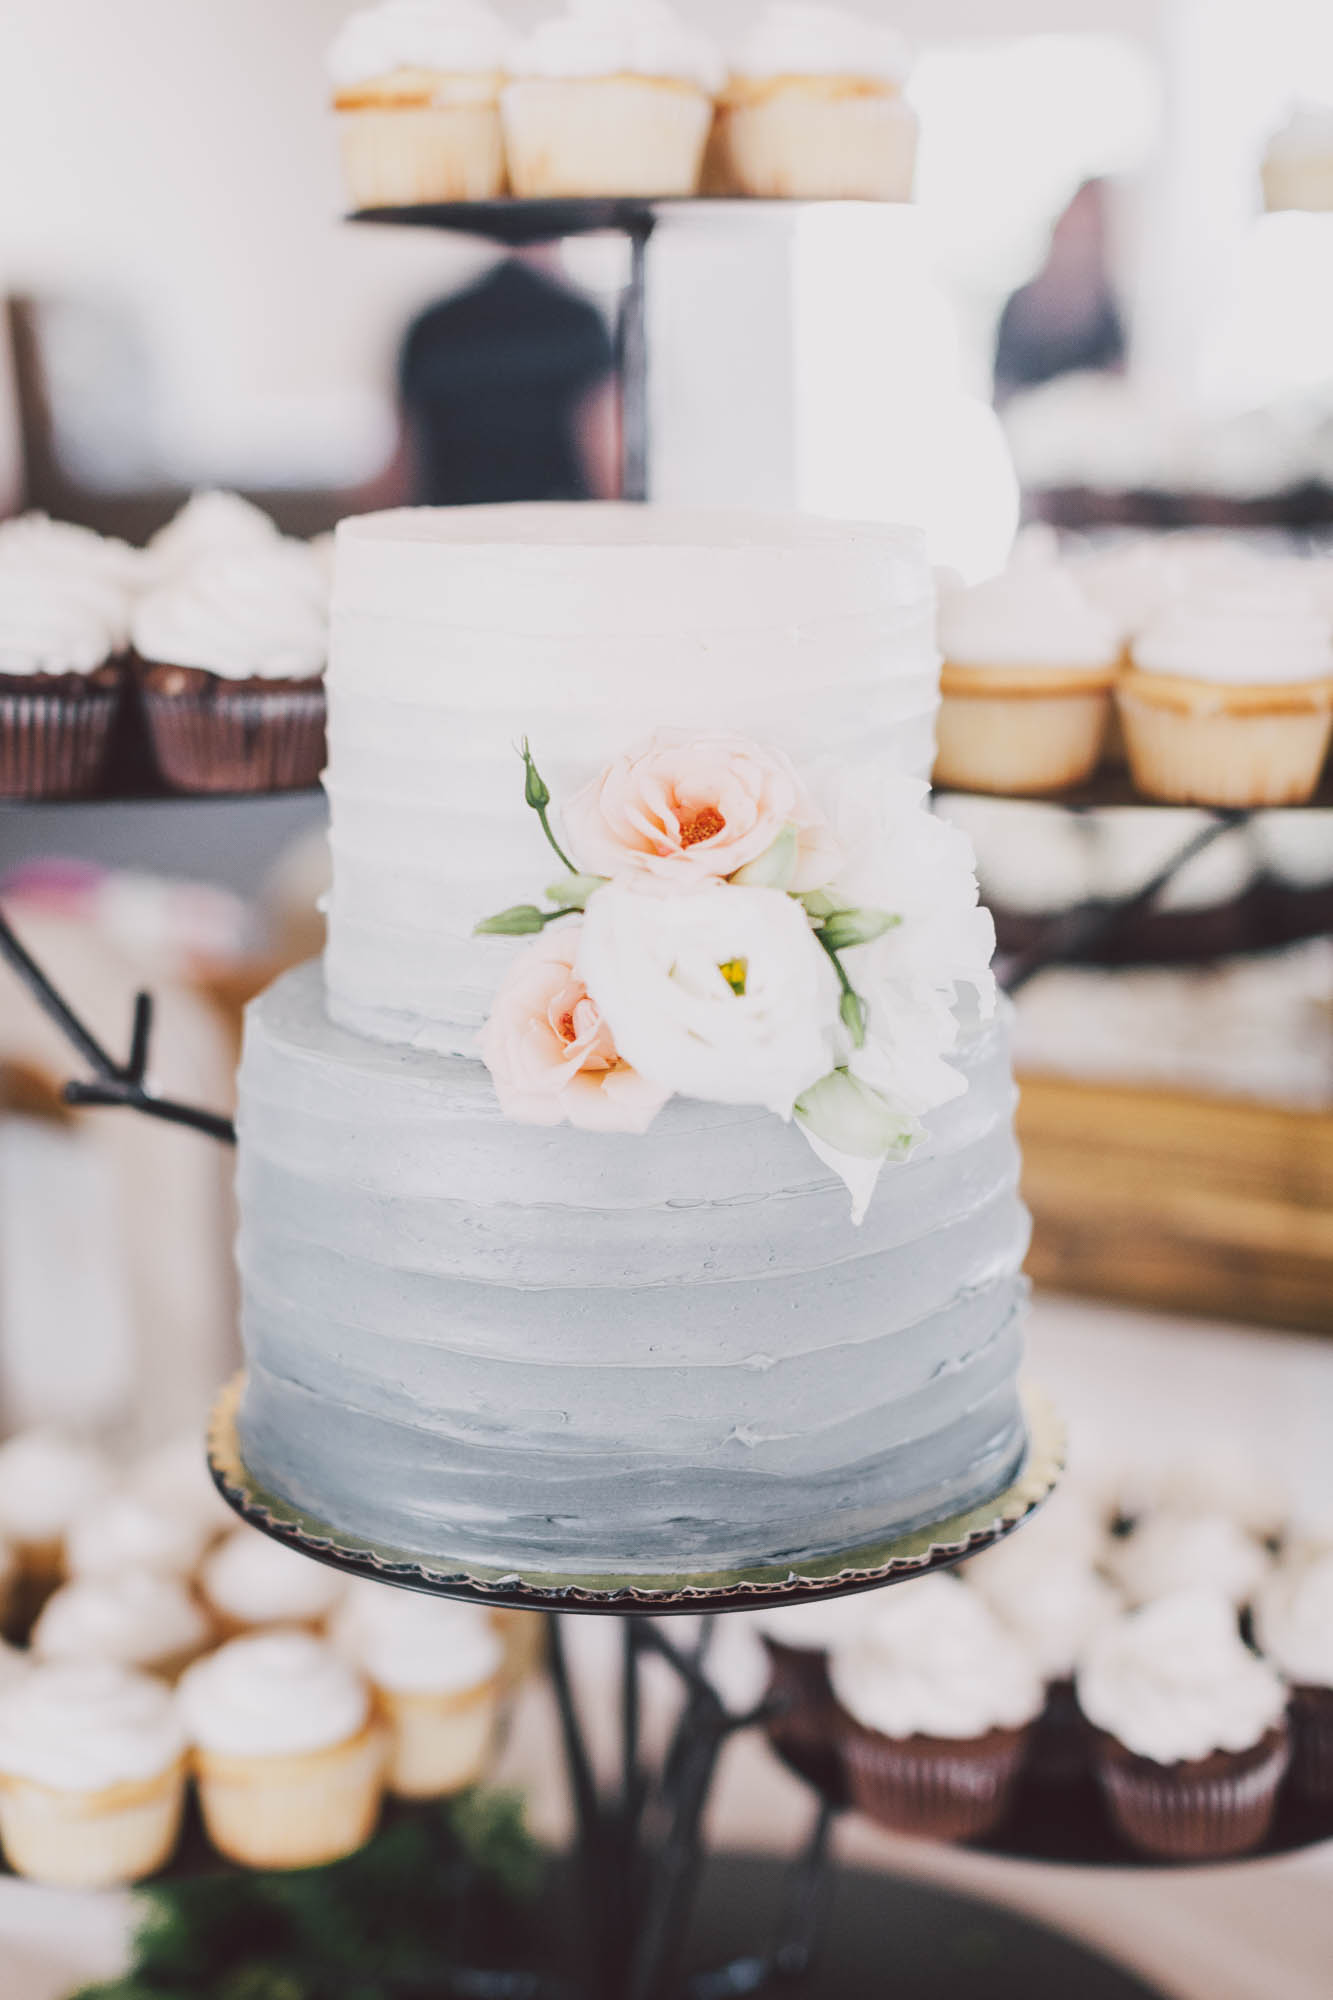 Wedding cake designs & 2018 wedding trends